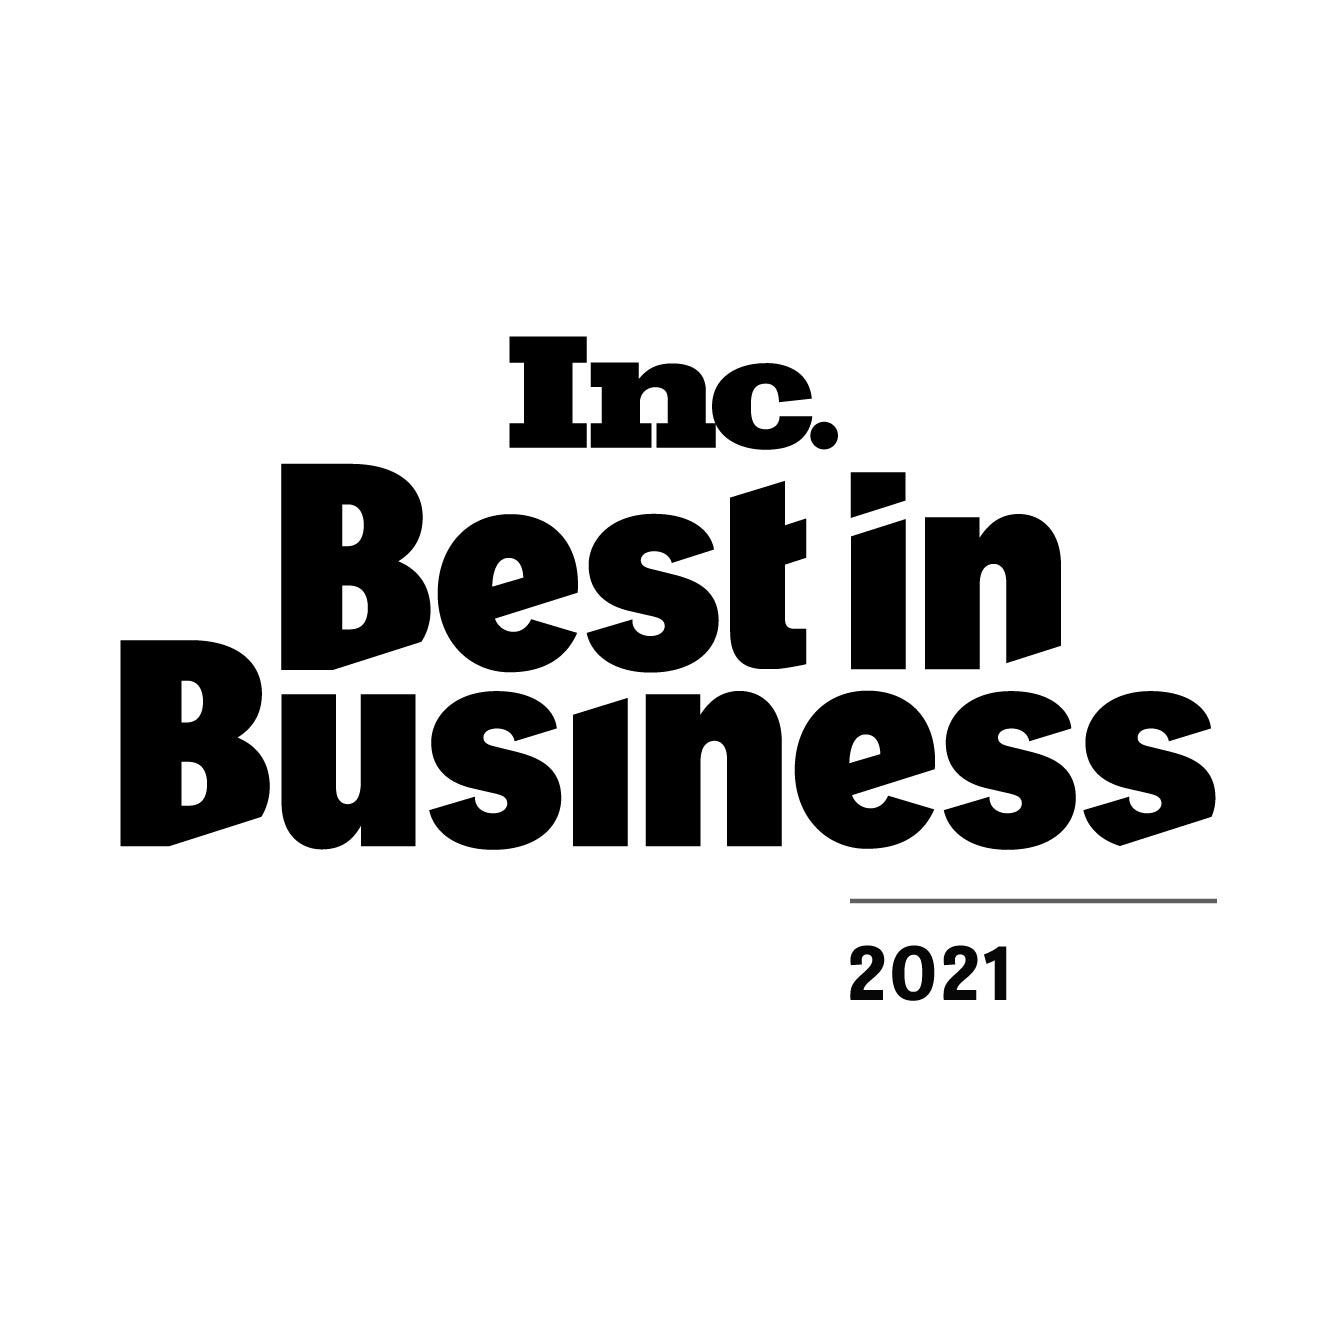 INC. Best in Business 2021 logo